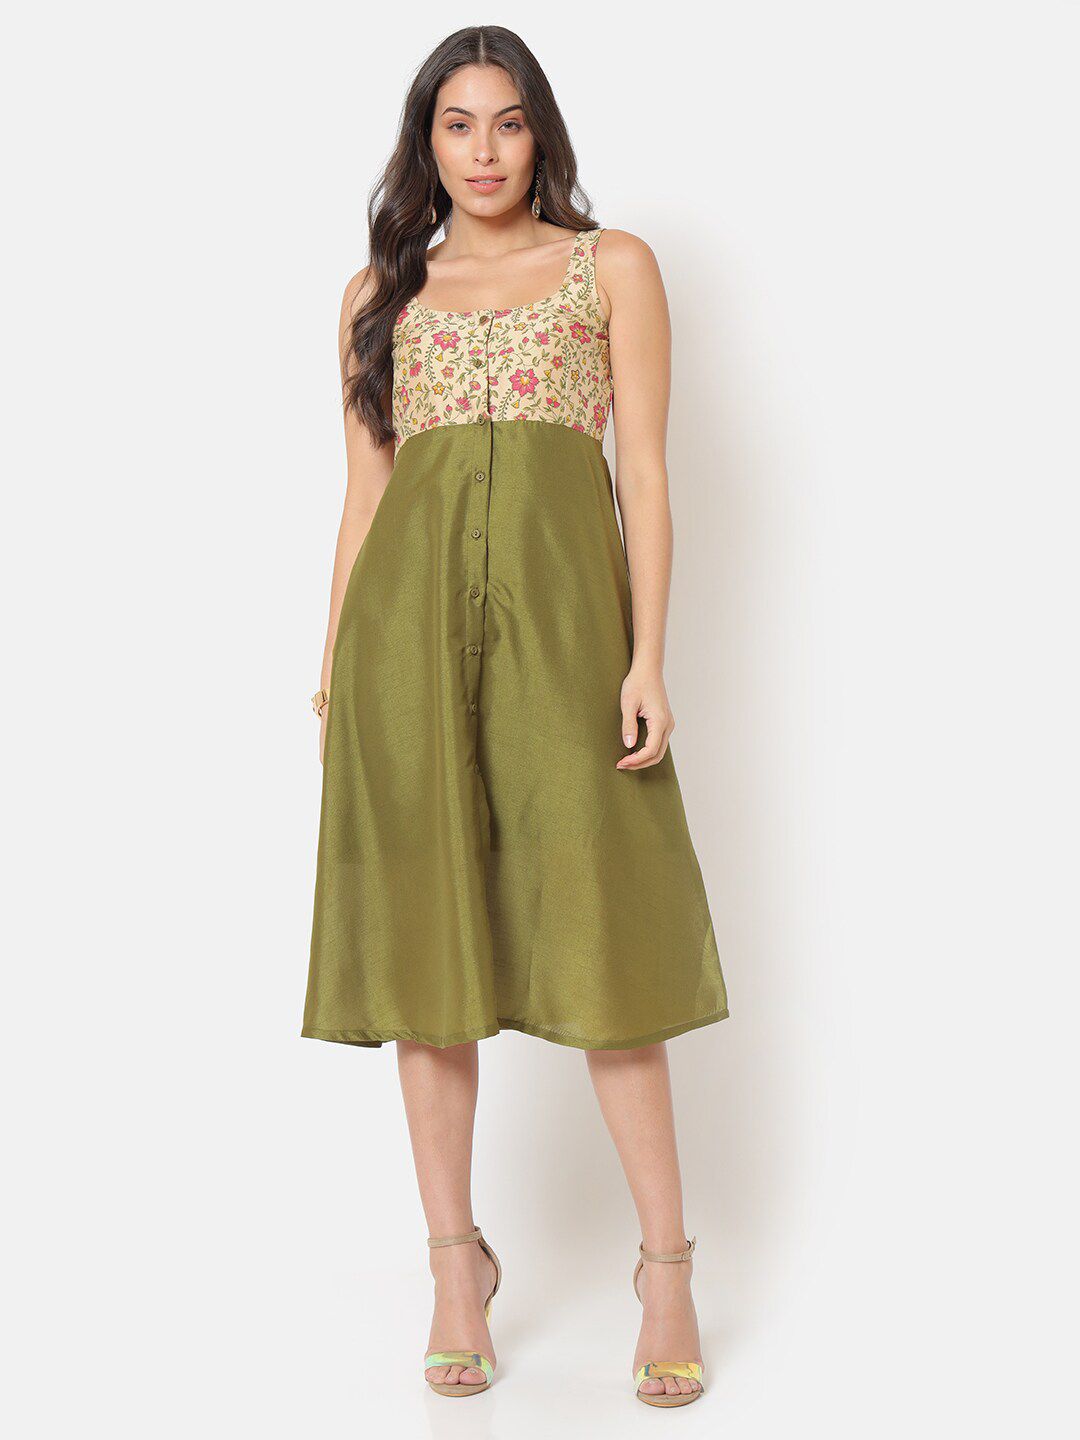 Saaki Olive Green & Beige Floral A-Line Midi Dress Price in India